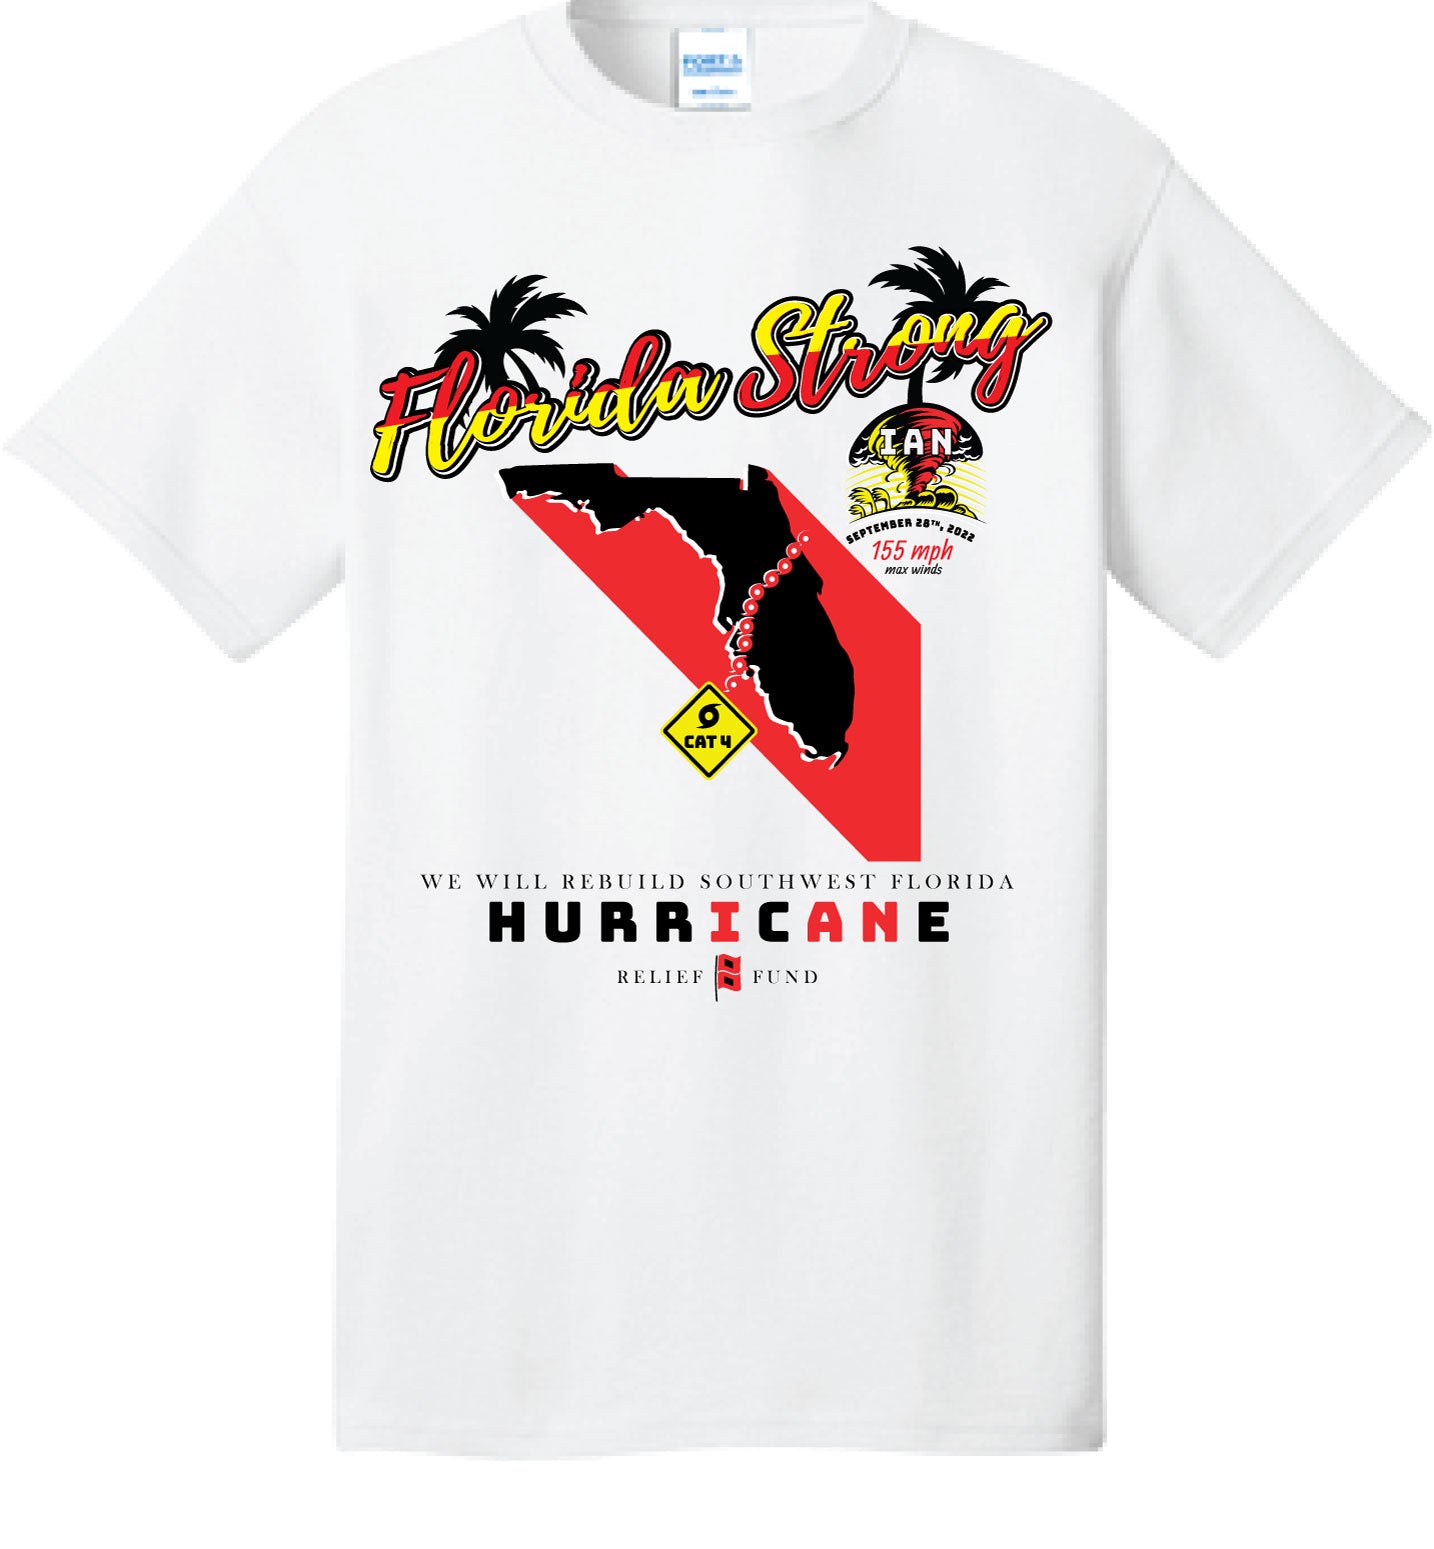 Hurricane Ian Relief Fund Tshirt